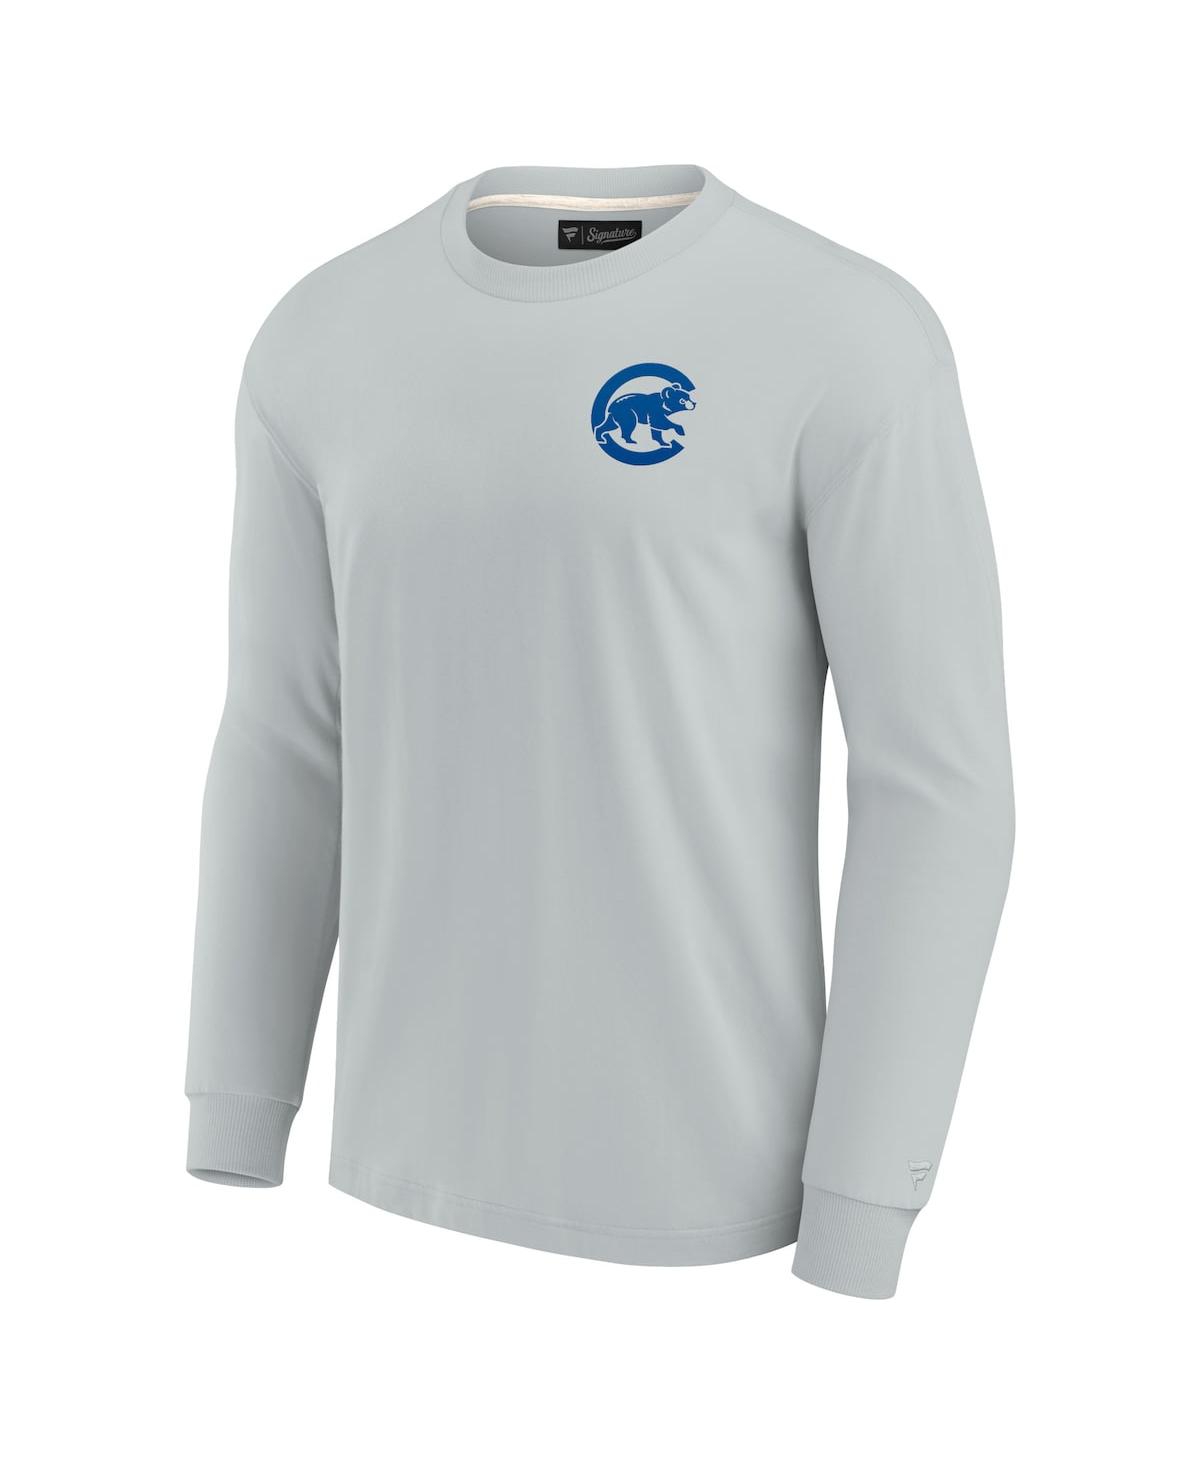 Shop Fanatics Signature Men's And Women's  Gray Chicago Cubs Super Soft Long Sleeve T-shirt